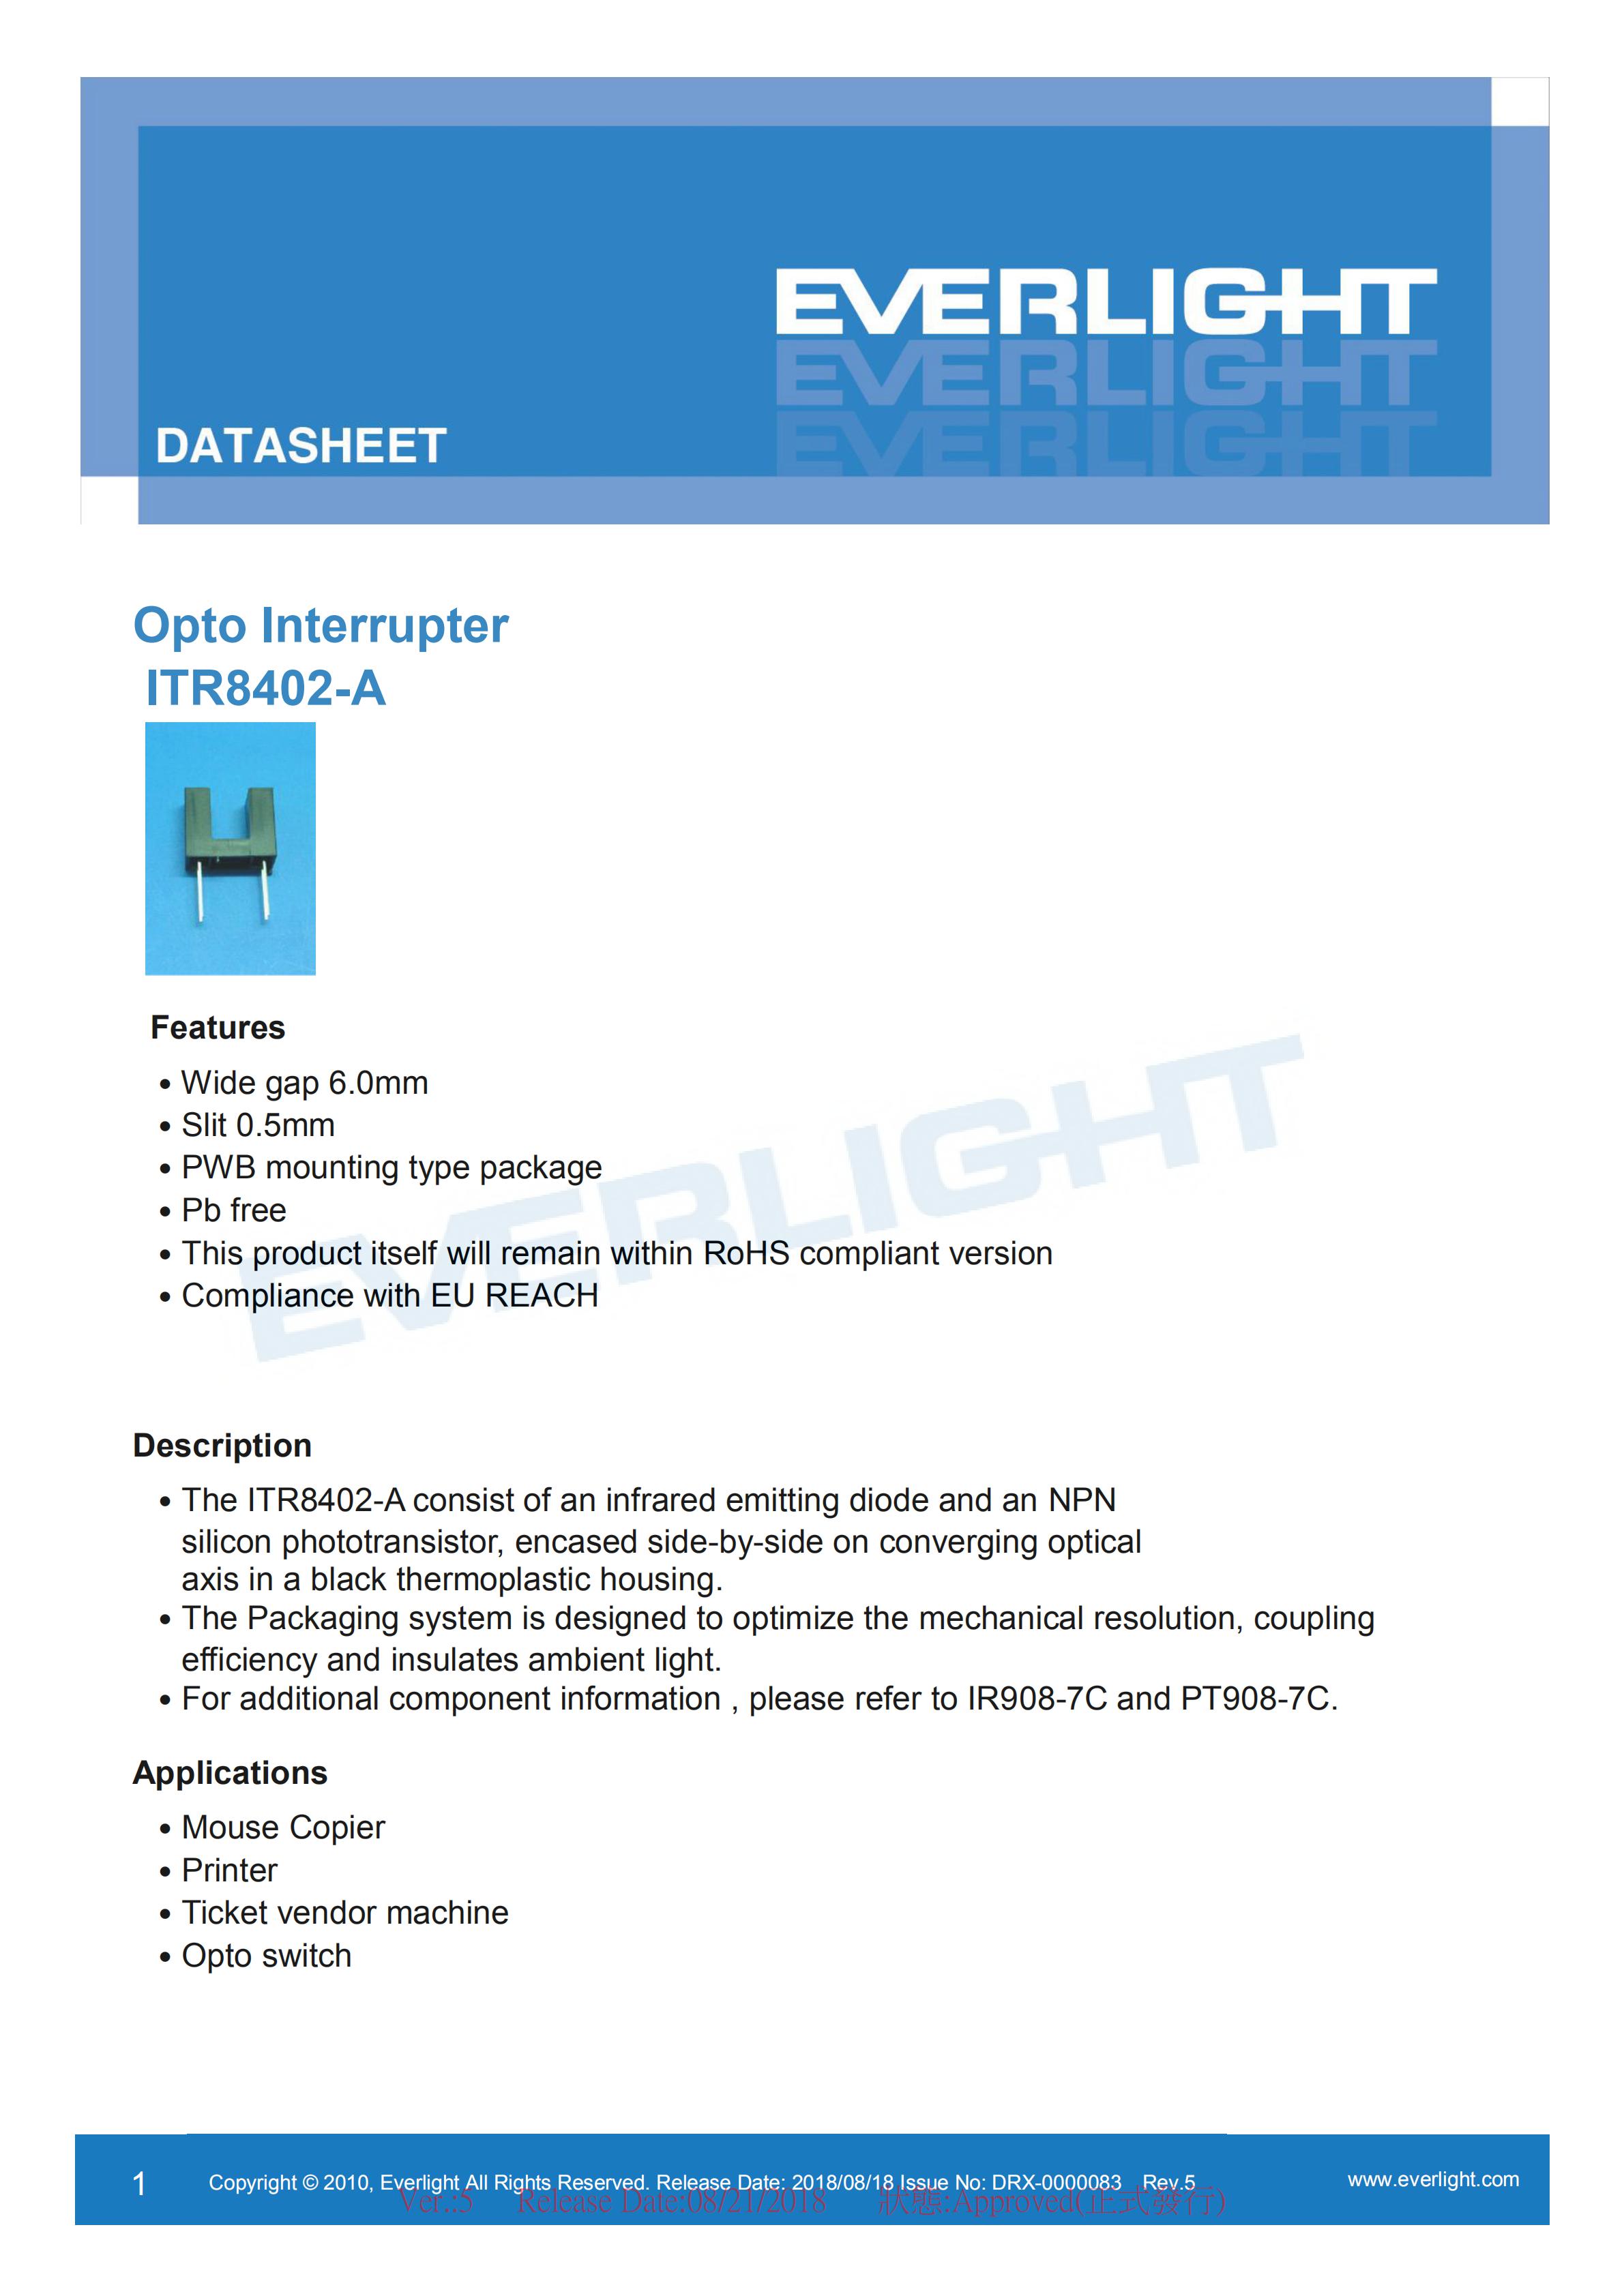 EVERLIGHT Optical Switch ITR8402-A Opto Interrupter